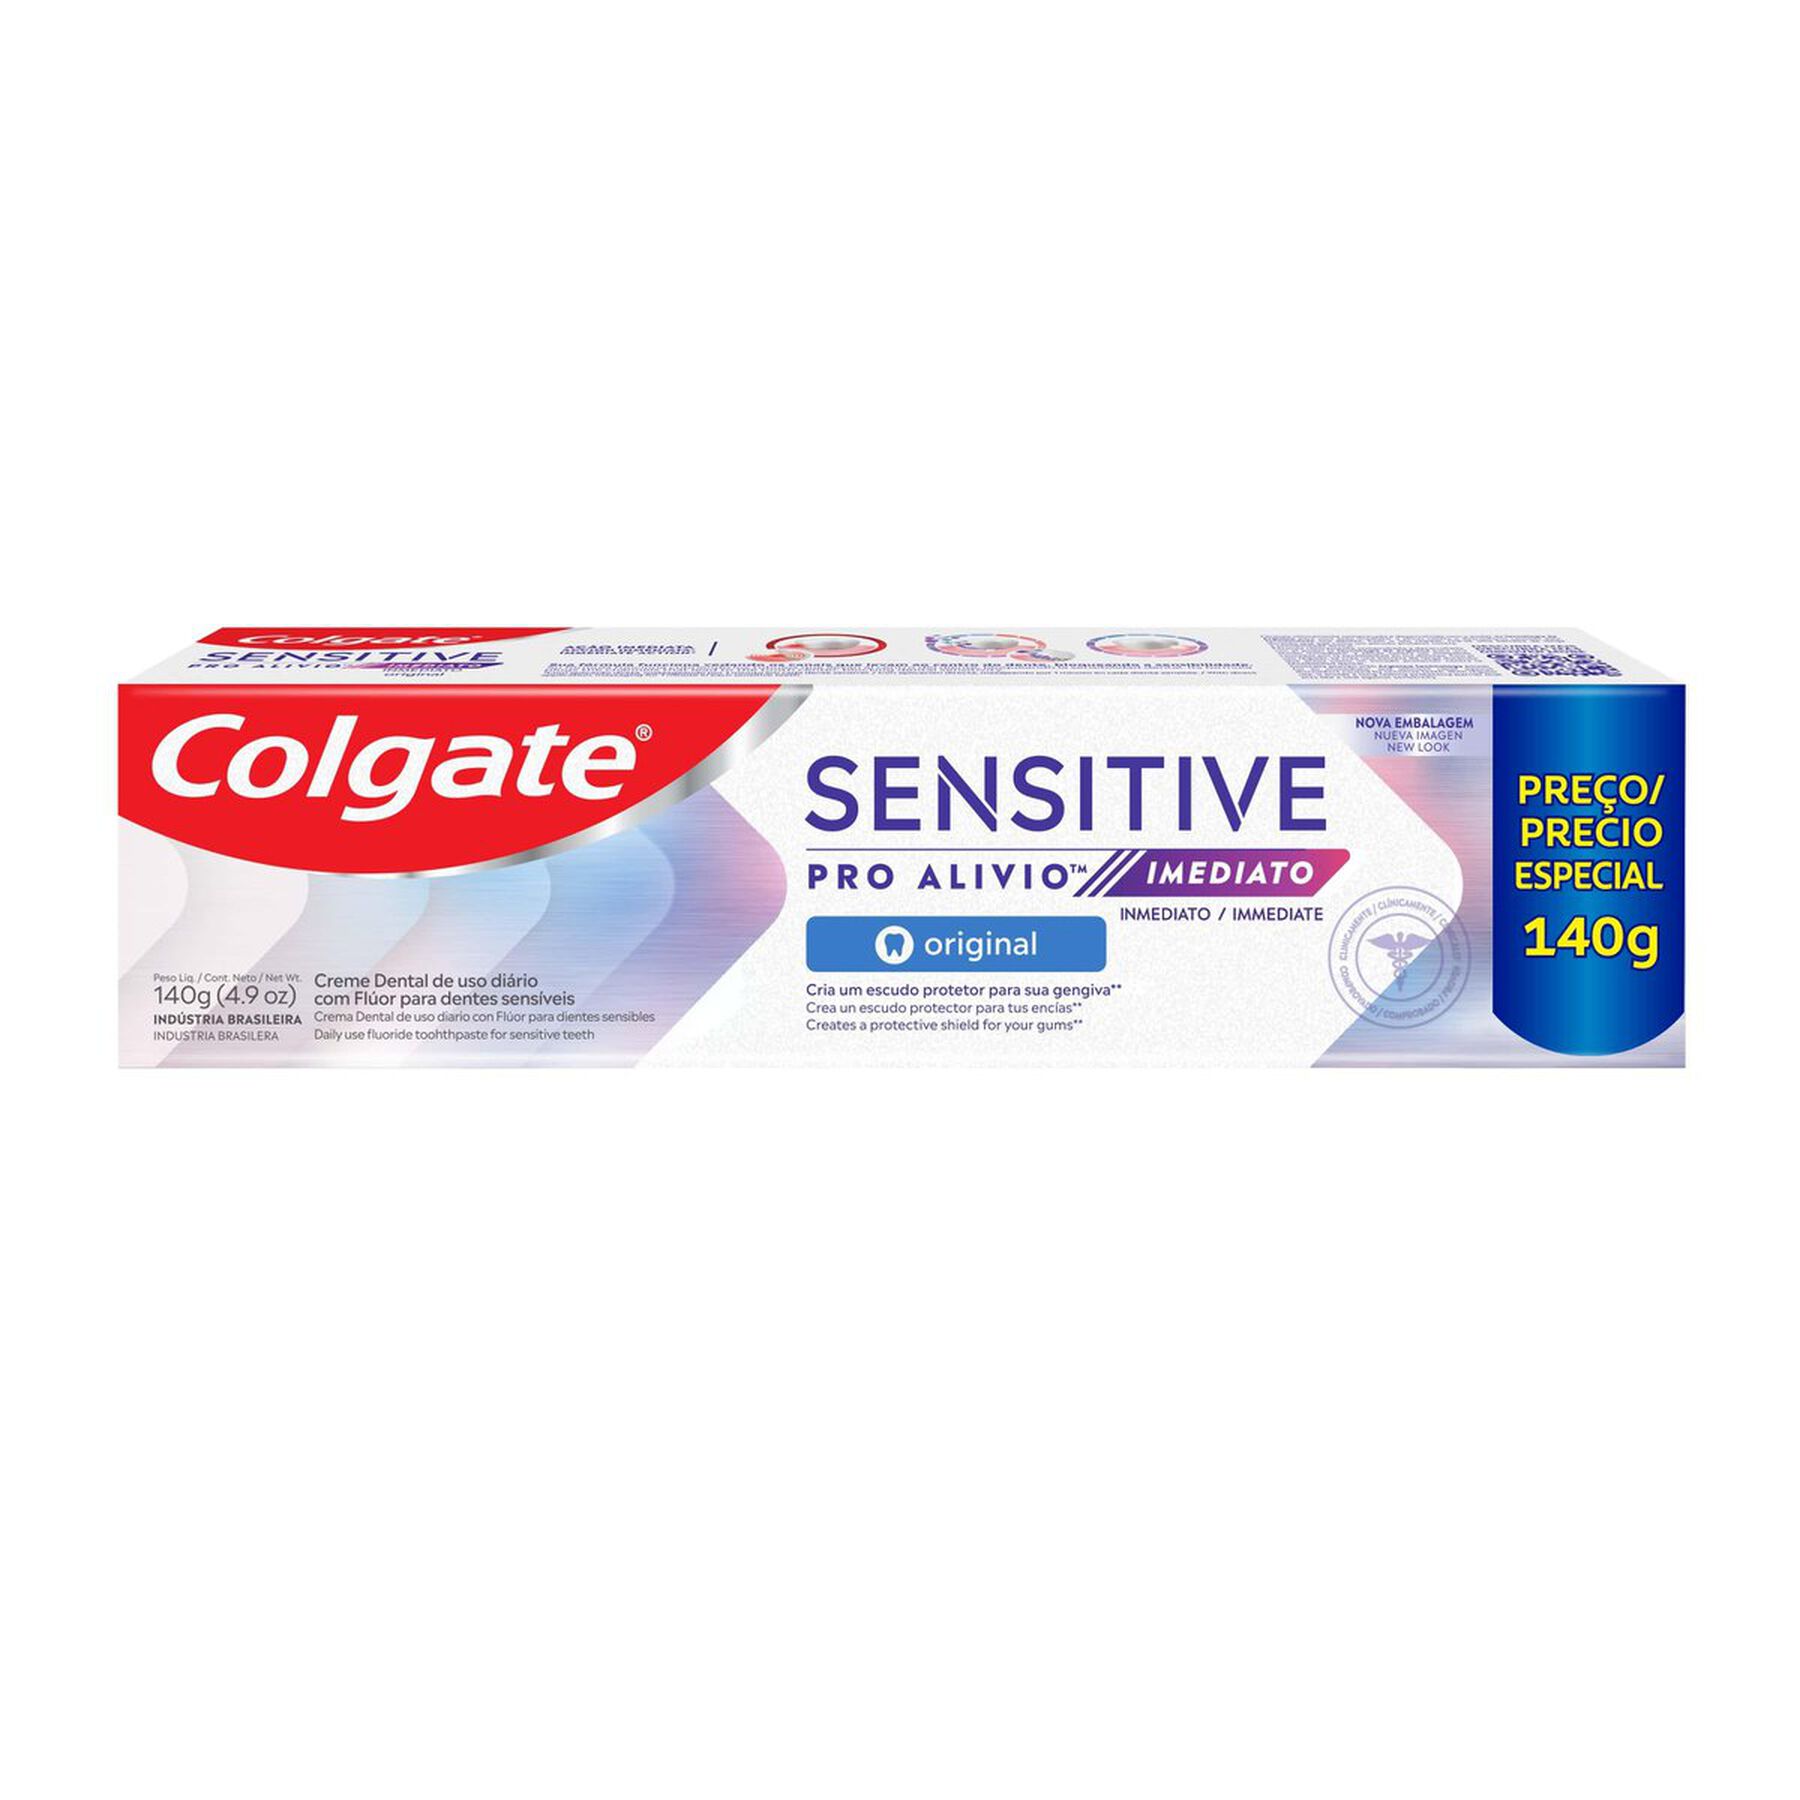 Creme Dental para Sensibilidade Colgate Sensitive Pro Alívio Imediato Original 140g